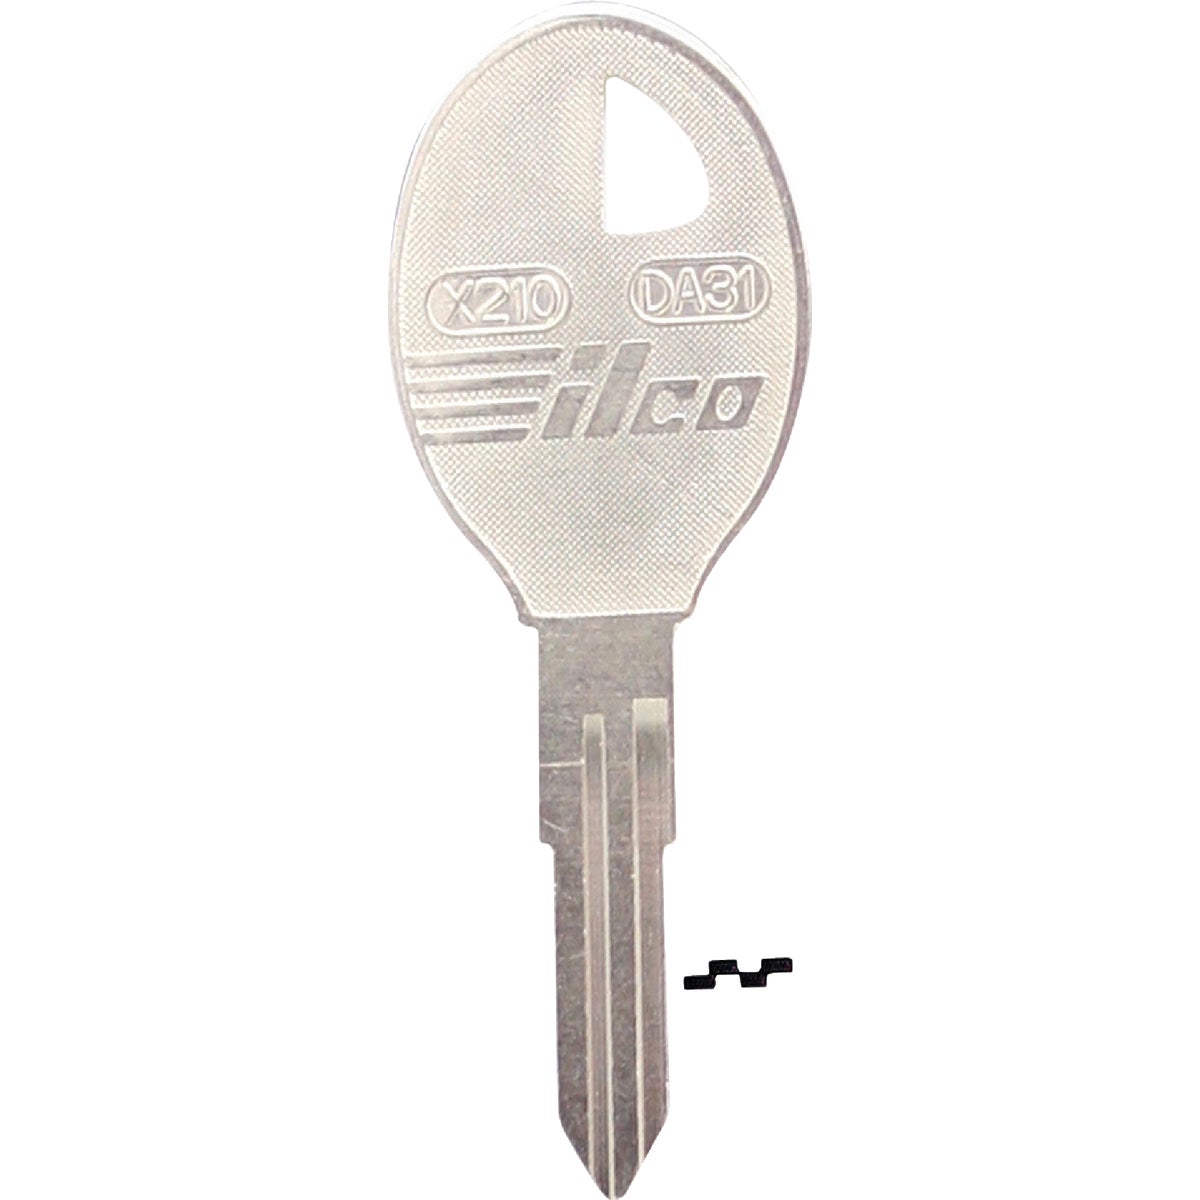 ILCO Nissan Nickel Plated Automotive Key, DA31 / X210 (10-Pack)